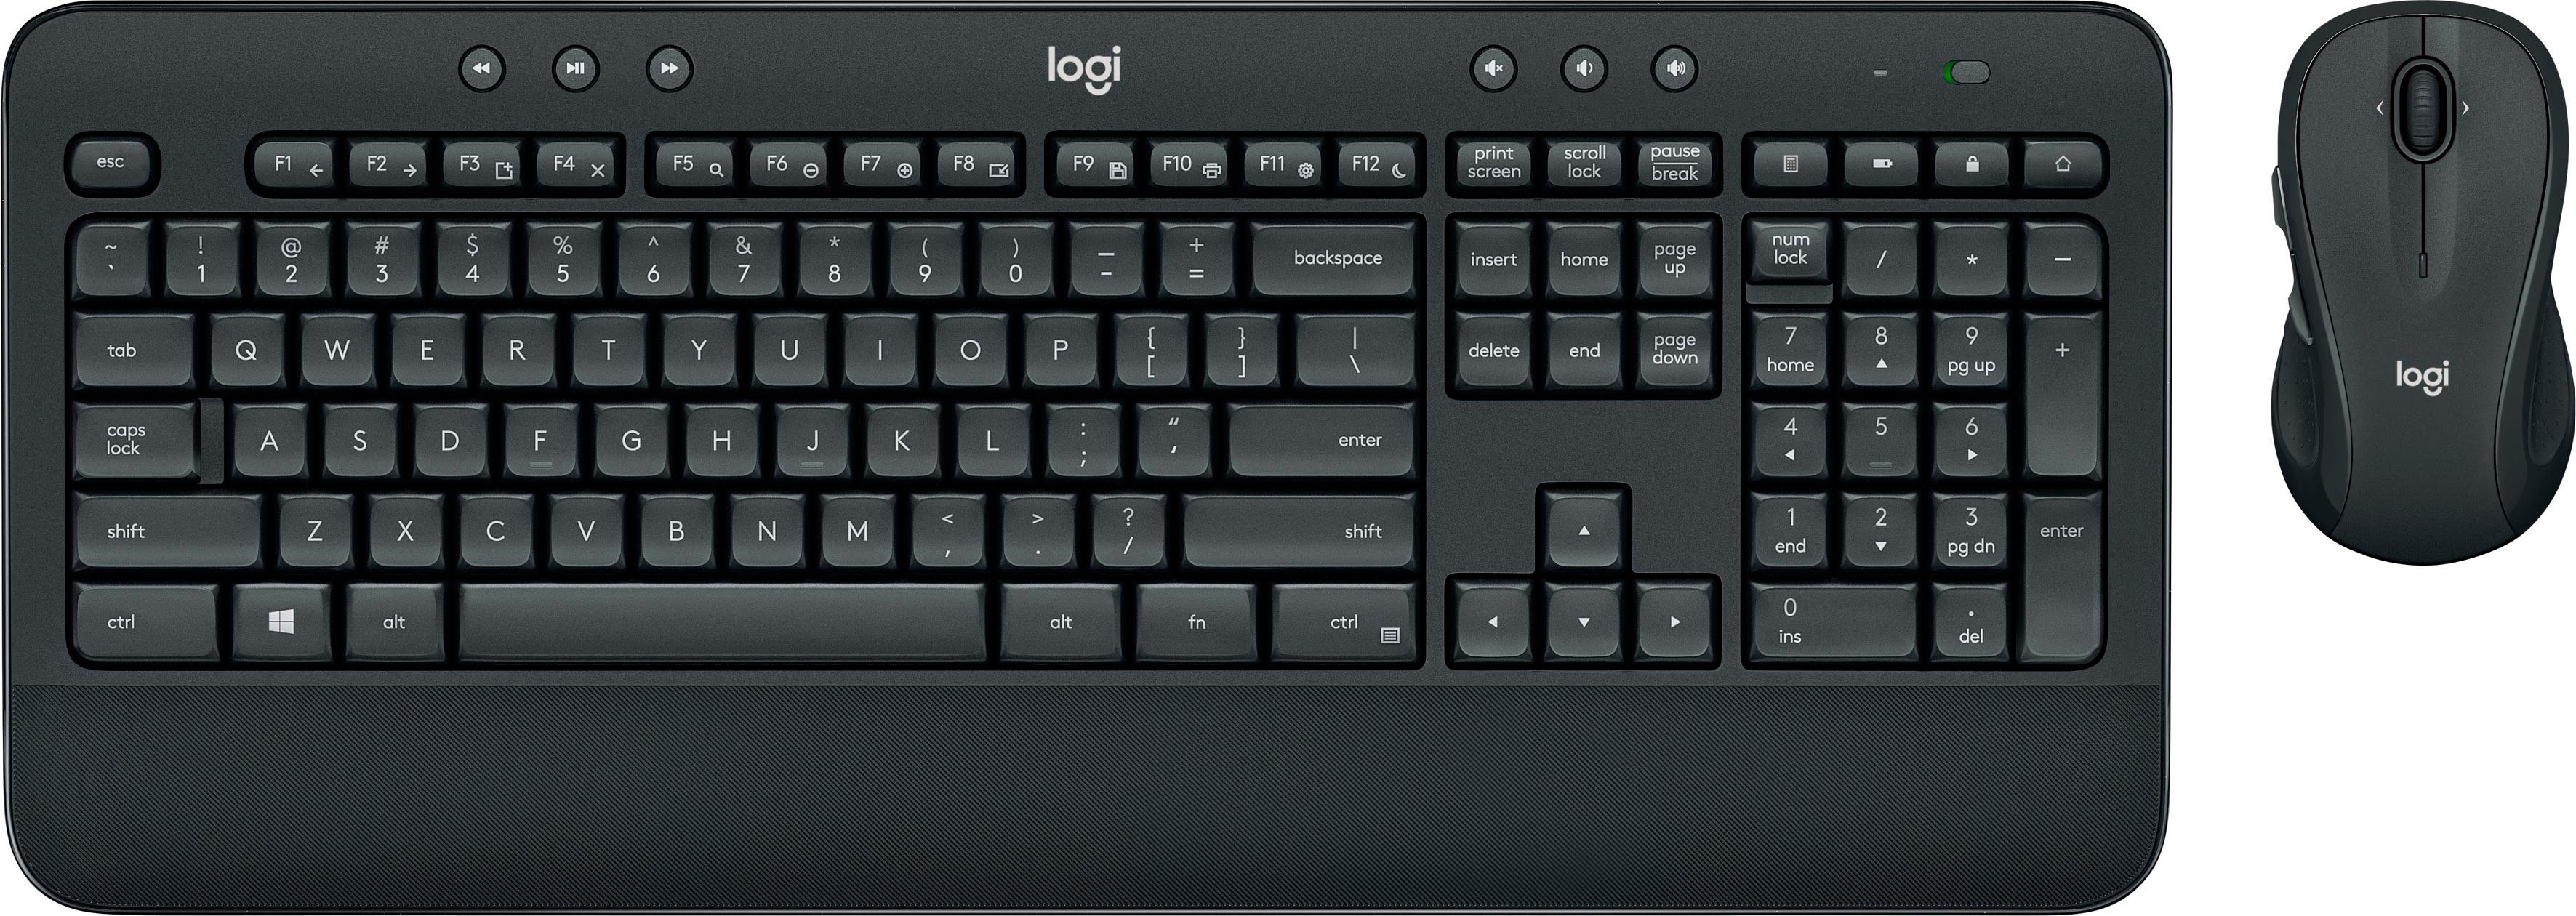 Logitech MK545 ADVANCED Eingabegeräte-Set | Tastatur-Sets